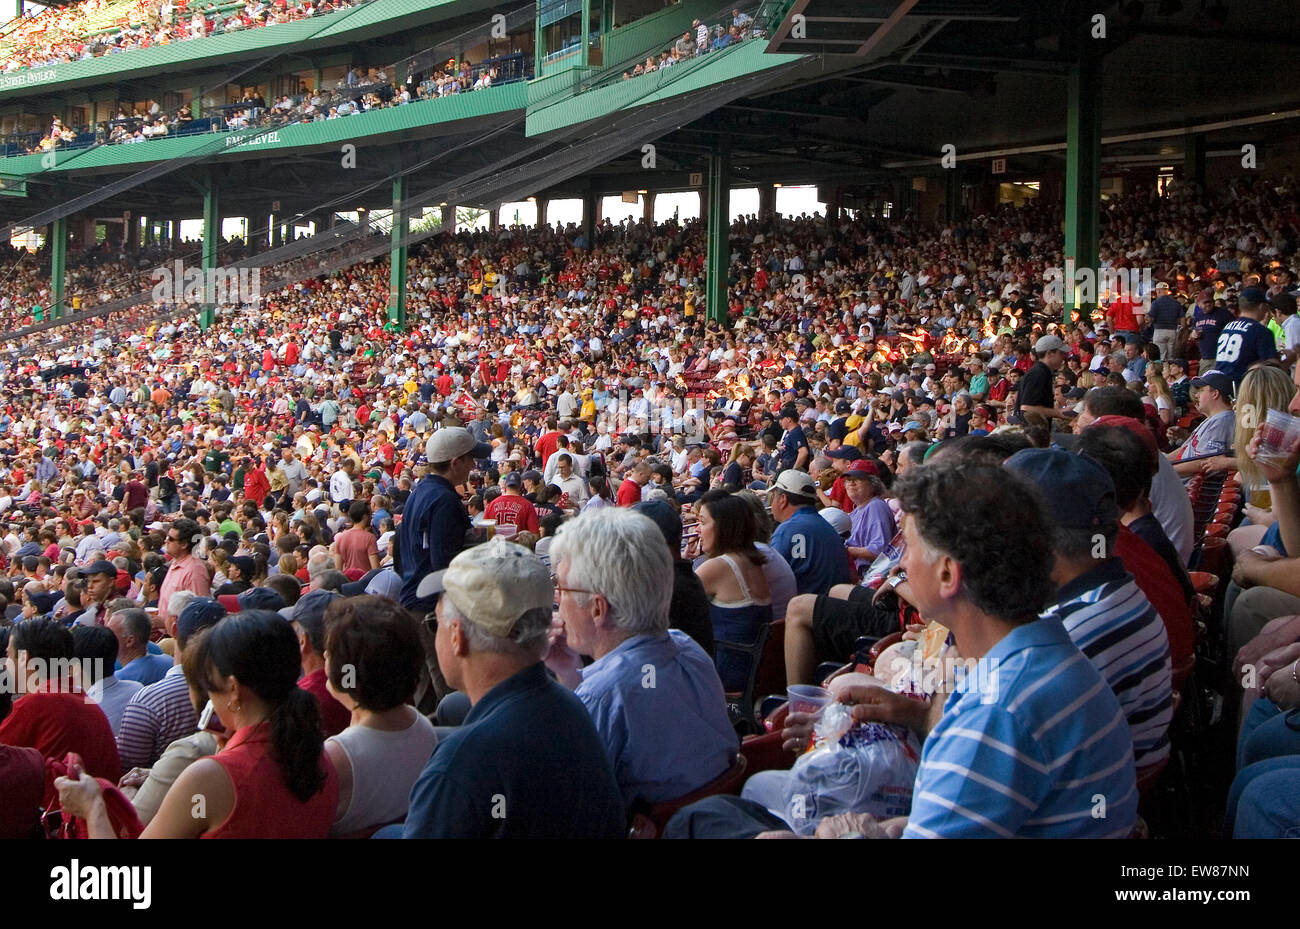 Stadium crowd, spectators at ball game, Fenway Park, Boston, Massachusetts Stock Photo